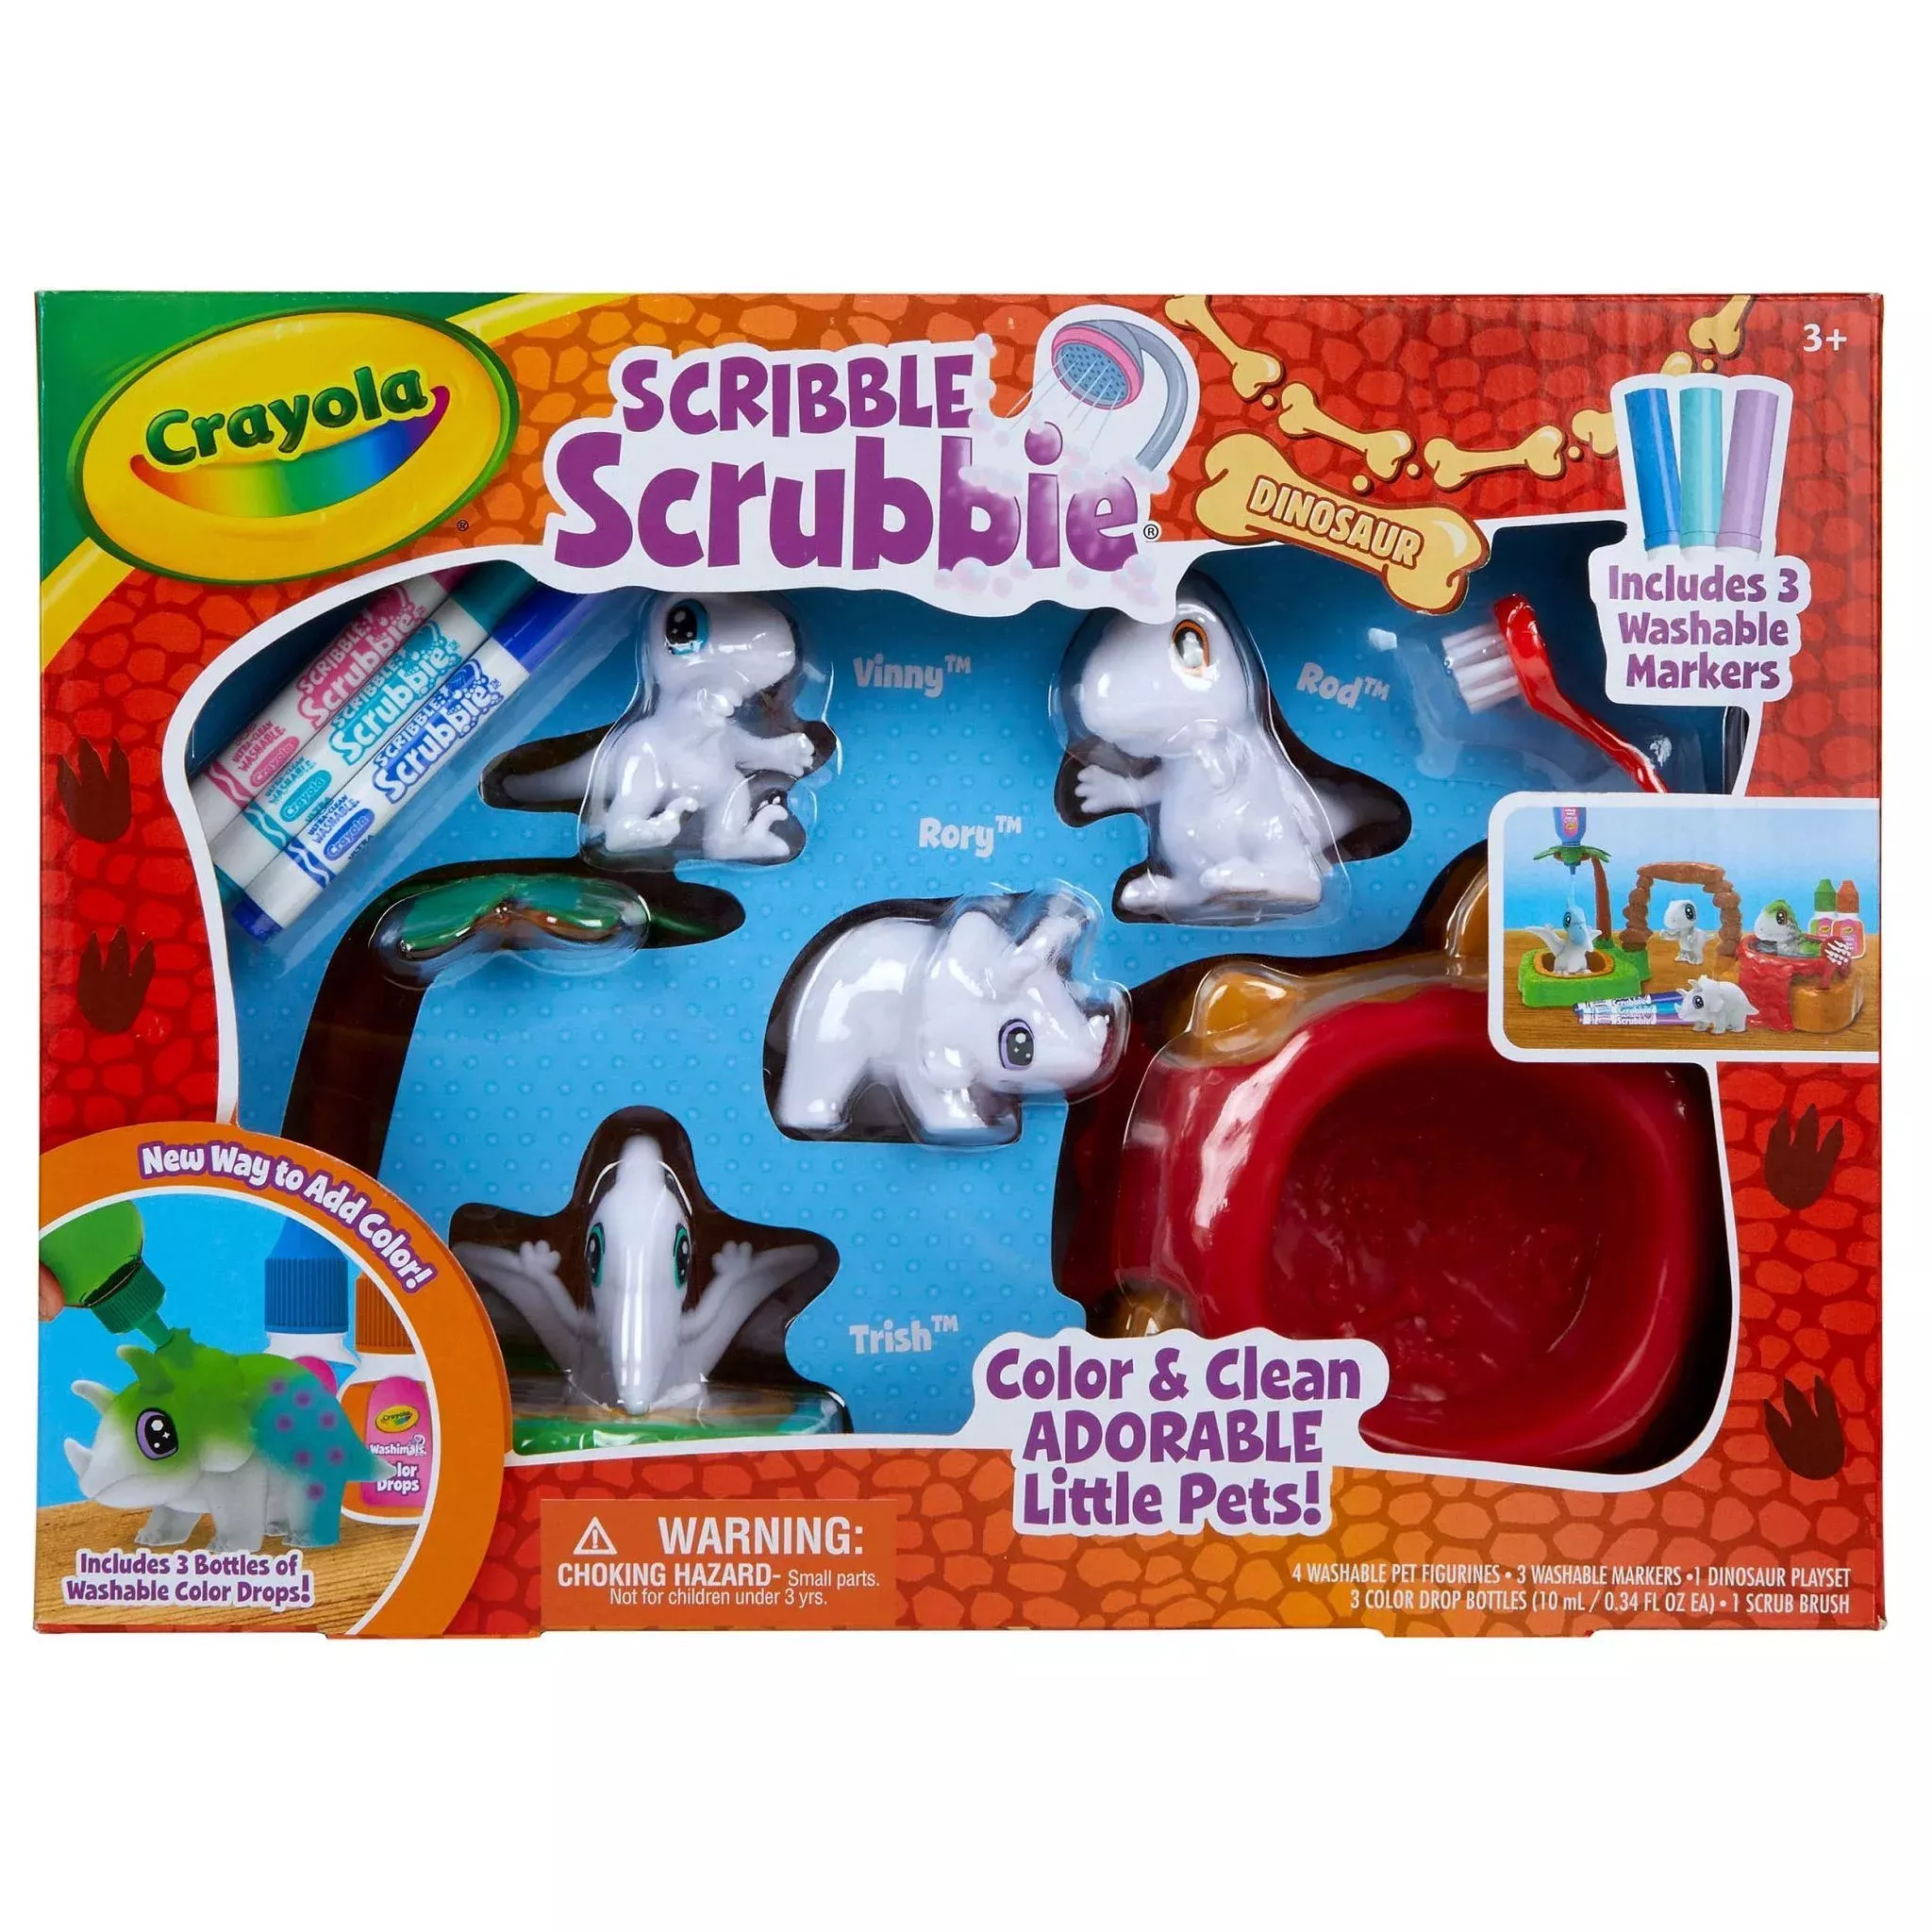 Crayola Scribble Scrubbie Pets Safari Treehouse, Toy Storage Case